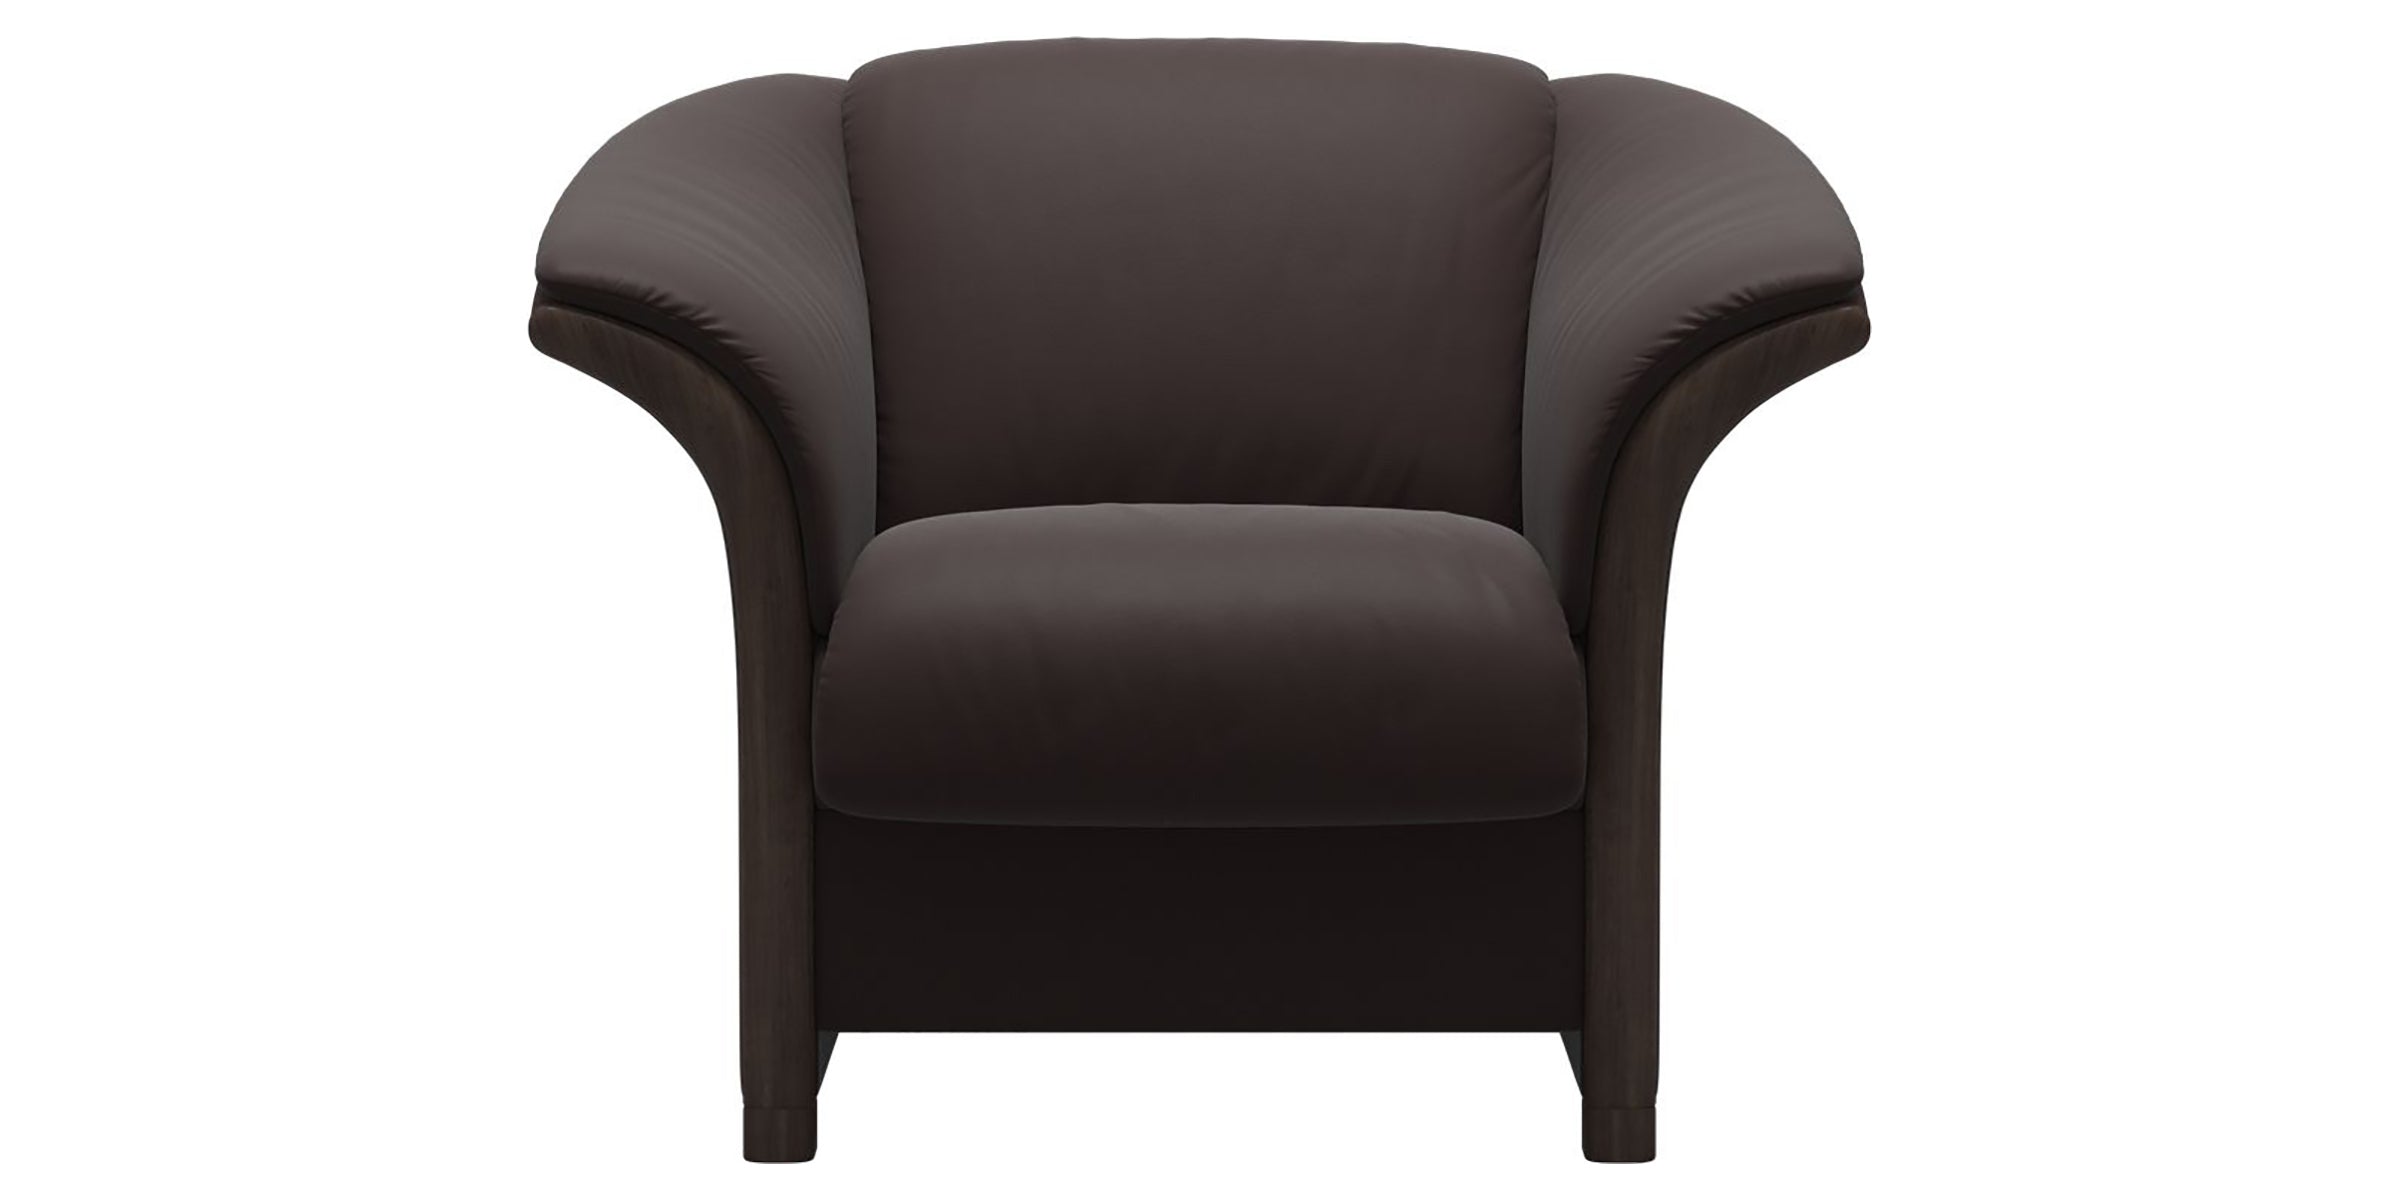 Paloma Leather Chocolate and Wenge Arm Trim | Stressless Manhattan Chair | Valley Ridge Furniture